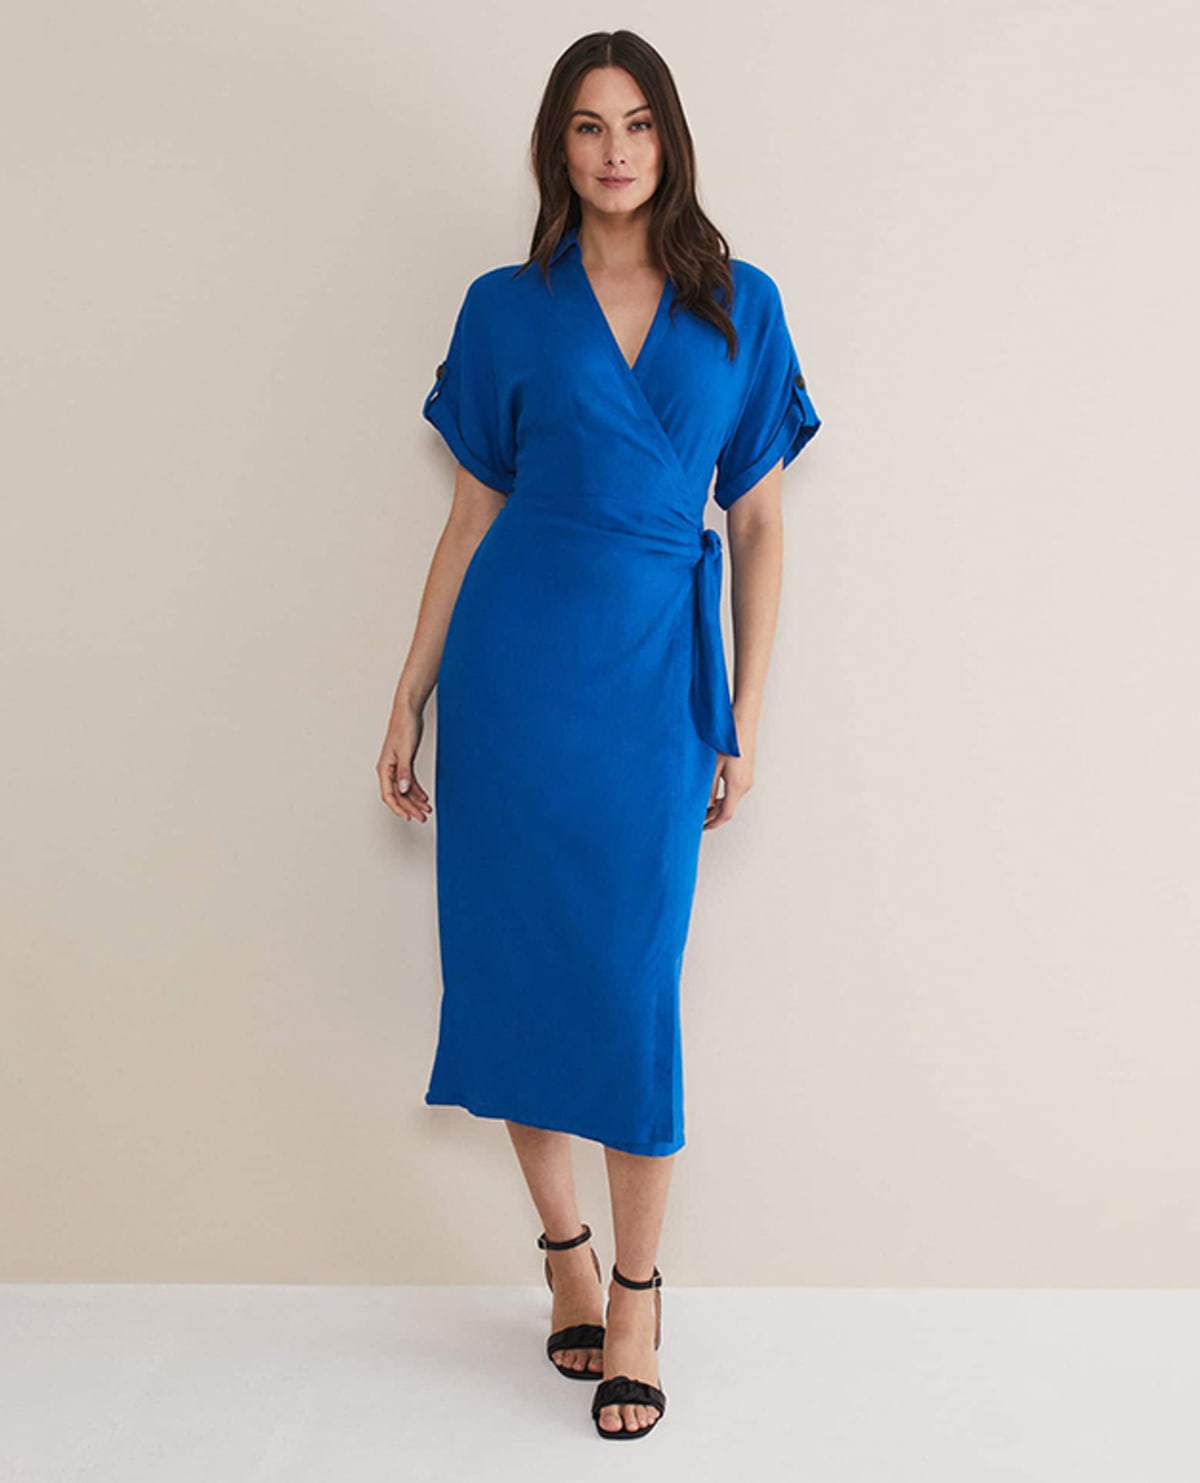 Woman wearing blue linen dress